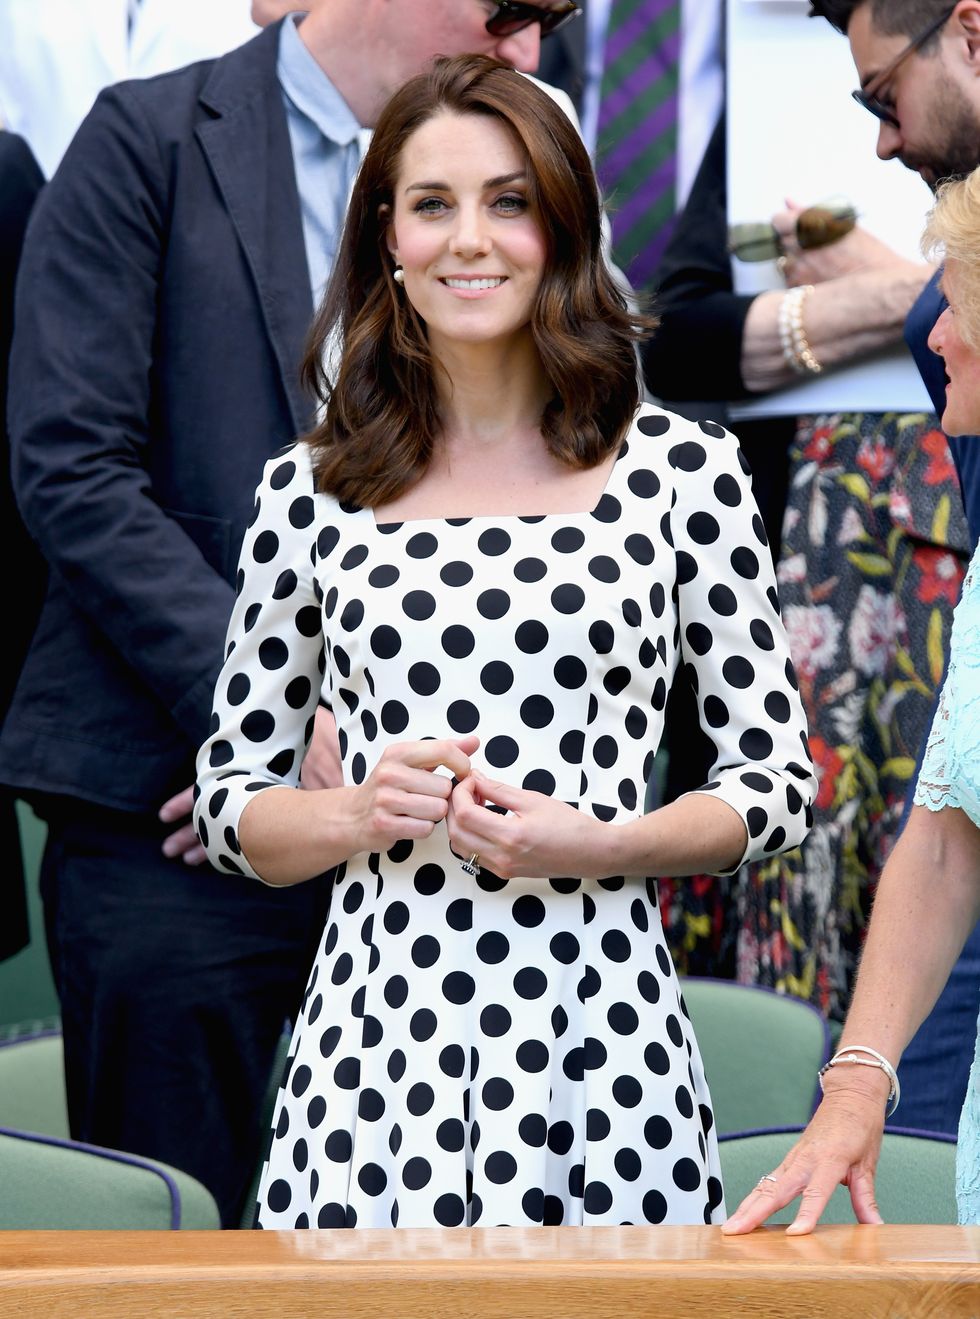 Kate Middleton, 凱特王妃, 圓點裝, 梅根, 洋裝, 王妃穿搭, 皇室穿搭, 穿搭